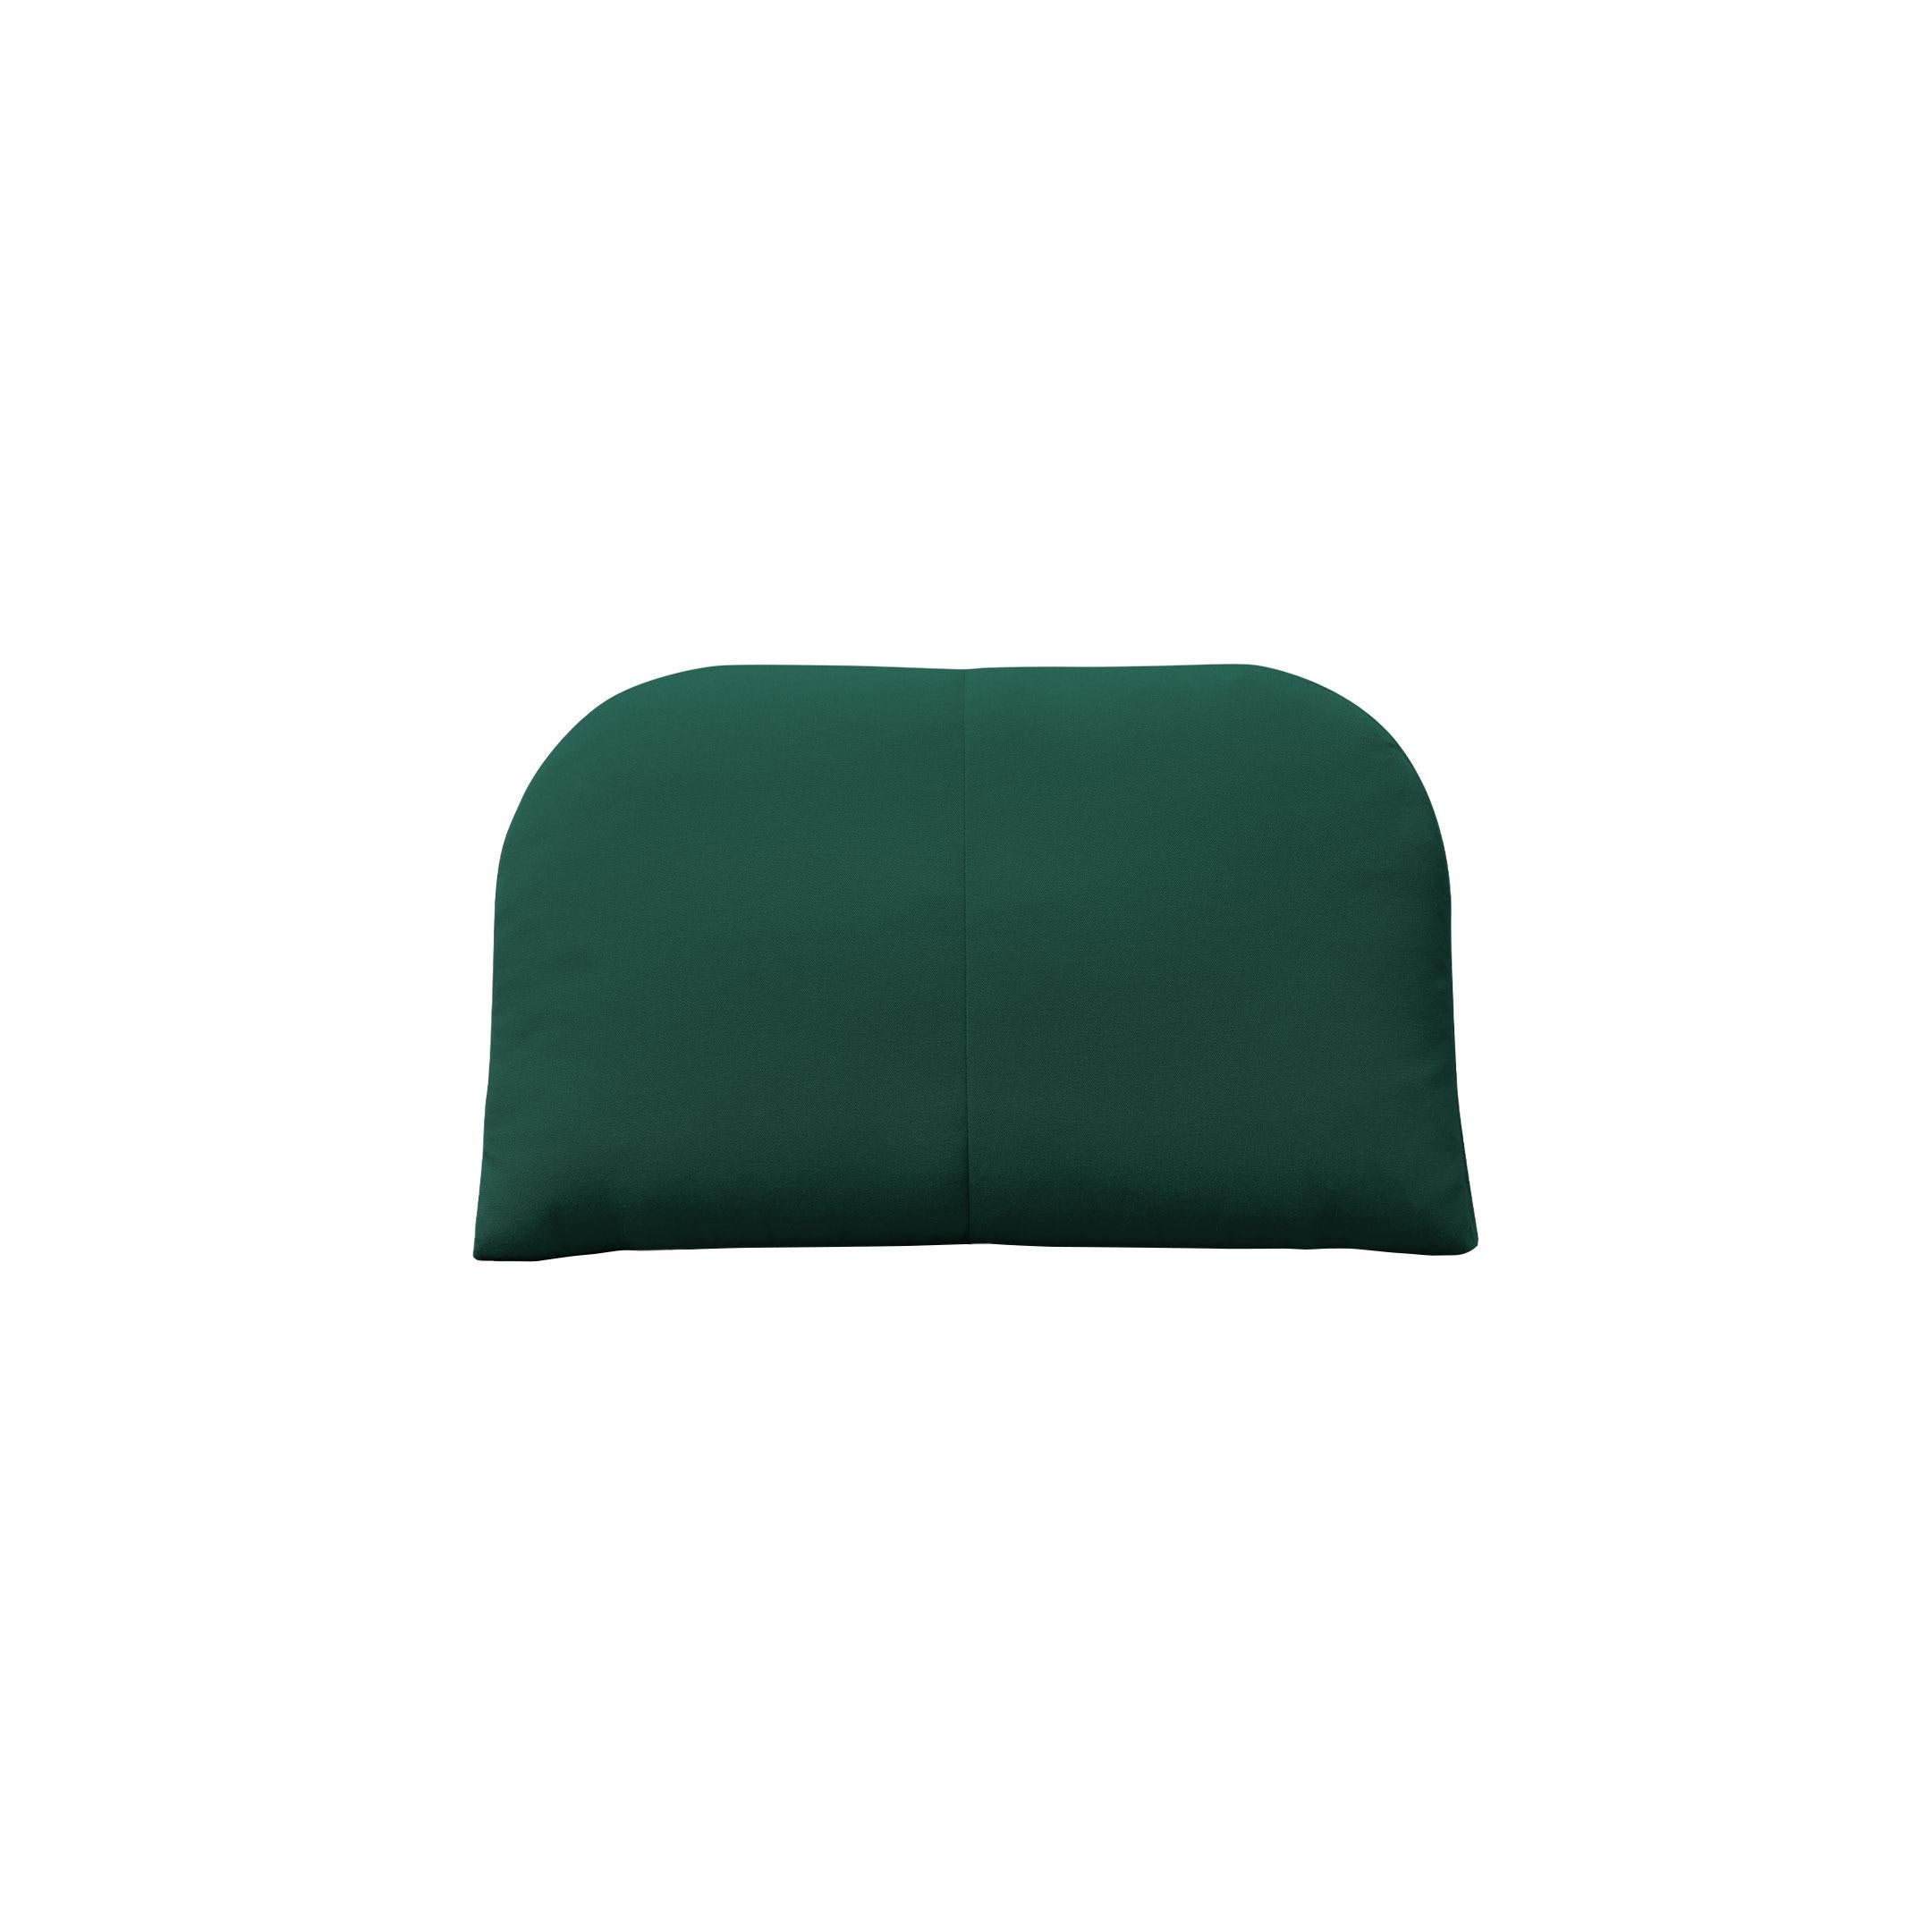 Tissage Bend Goods - Arc Throw Pillow in Navy Blue Sunbrella en vente